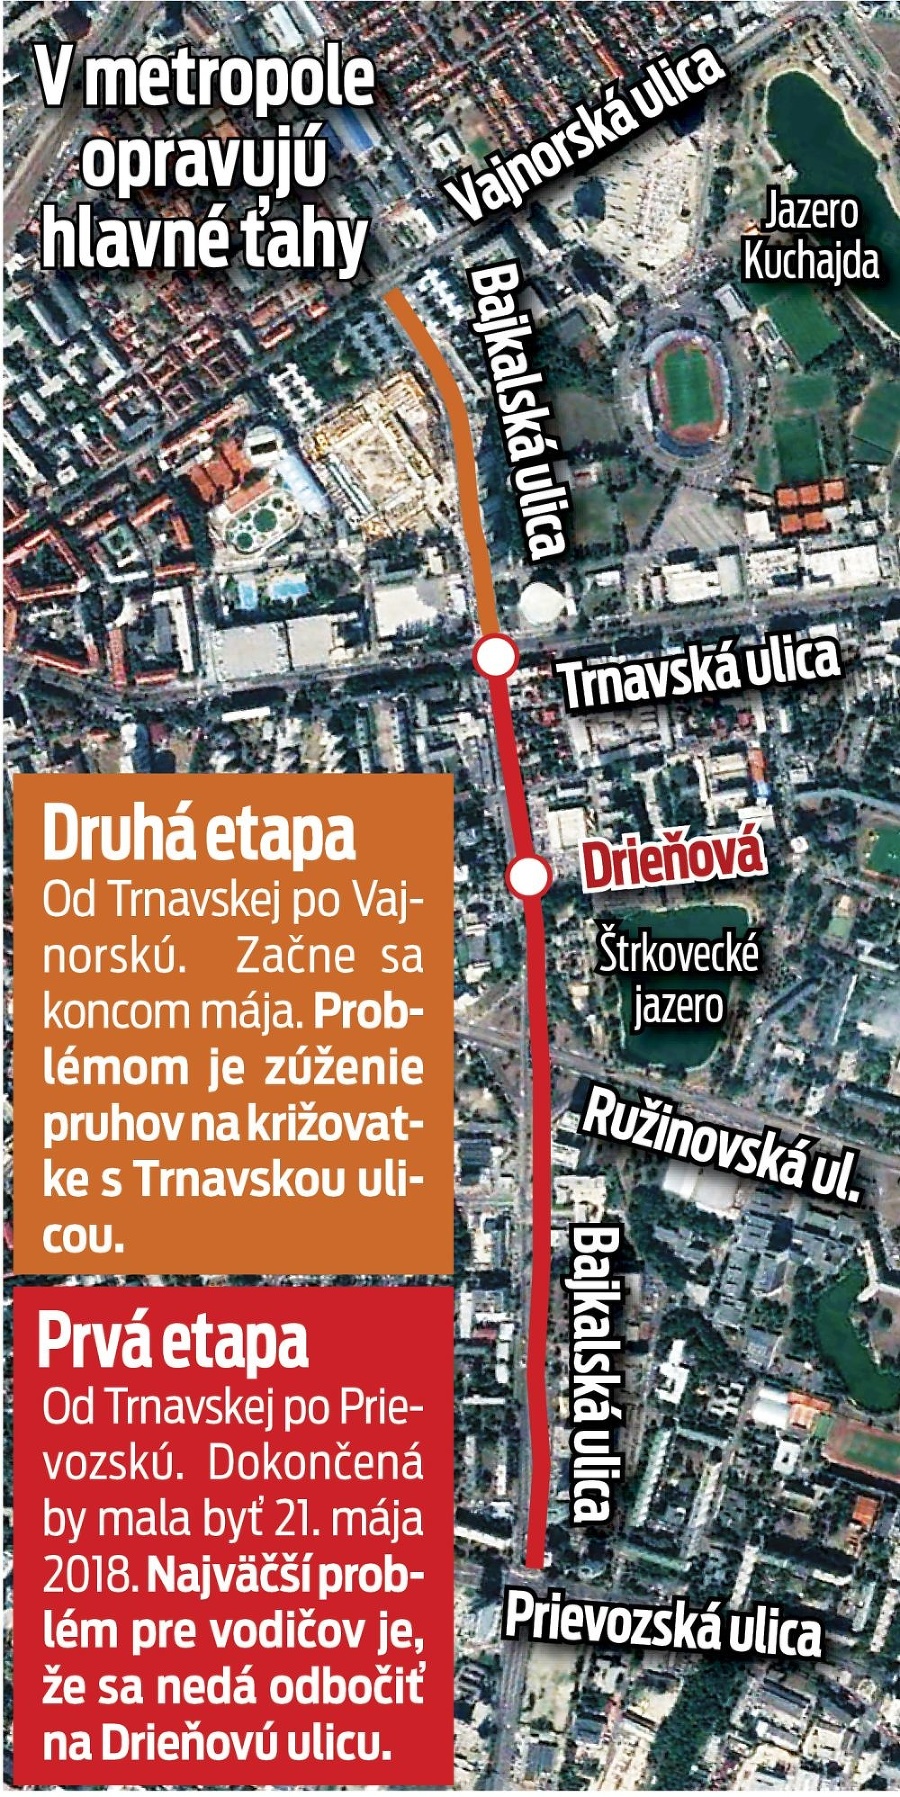 Bratislava opravuje hlavné dopravné